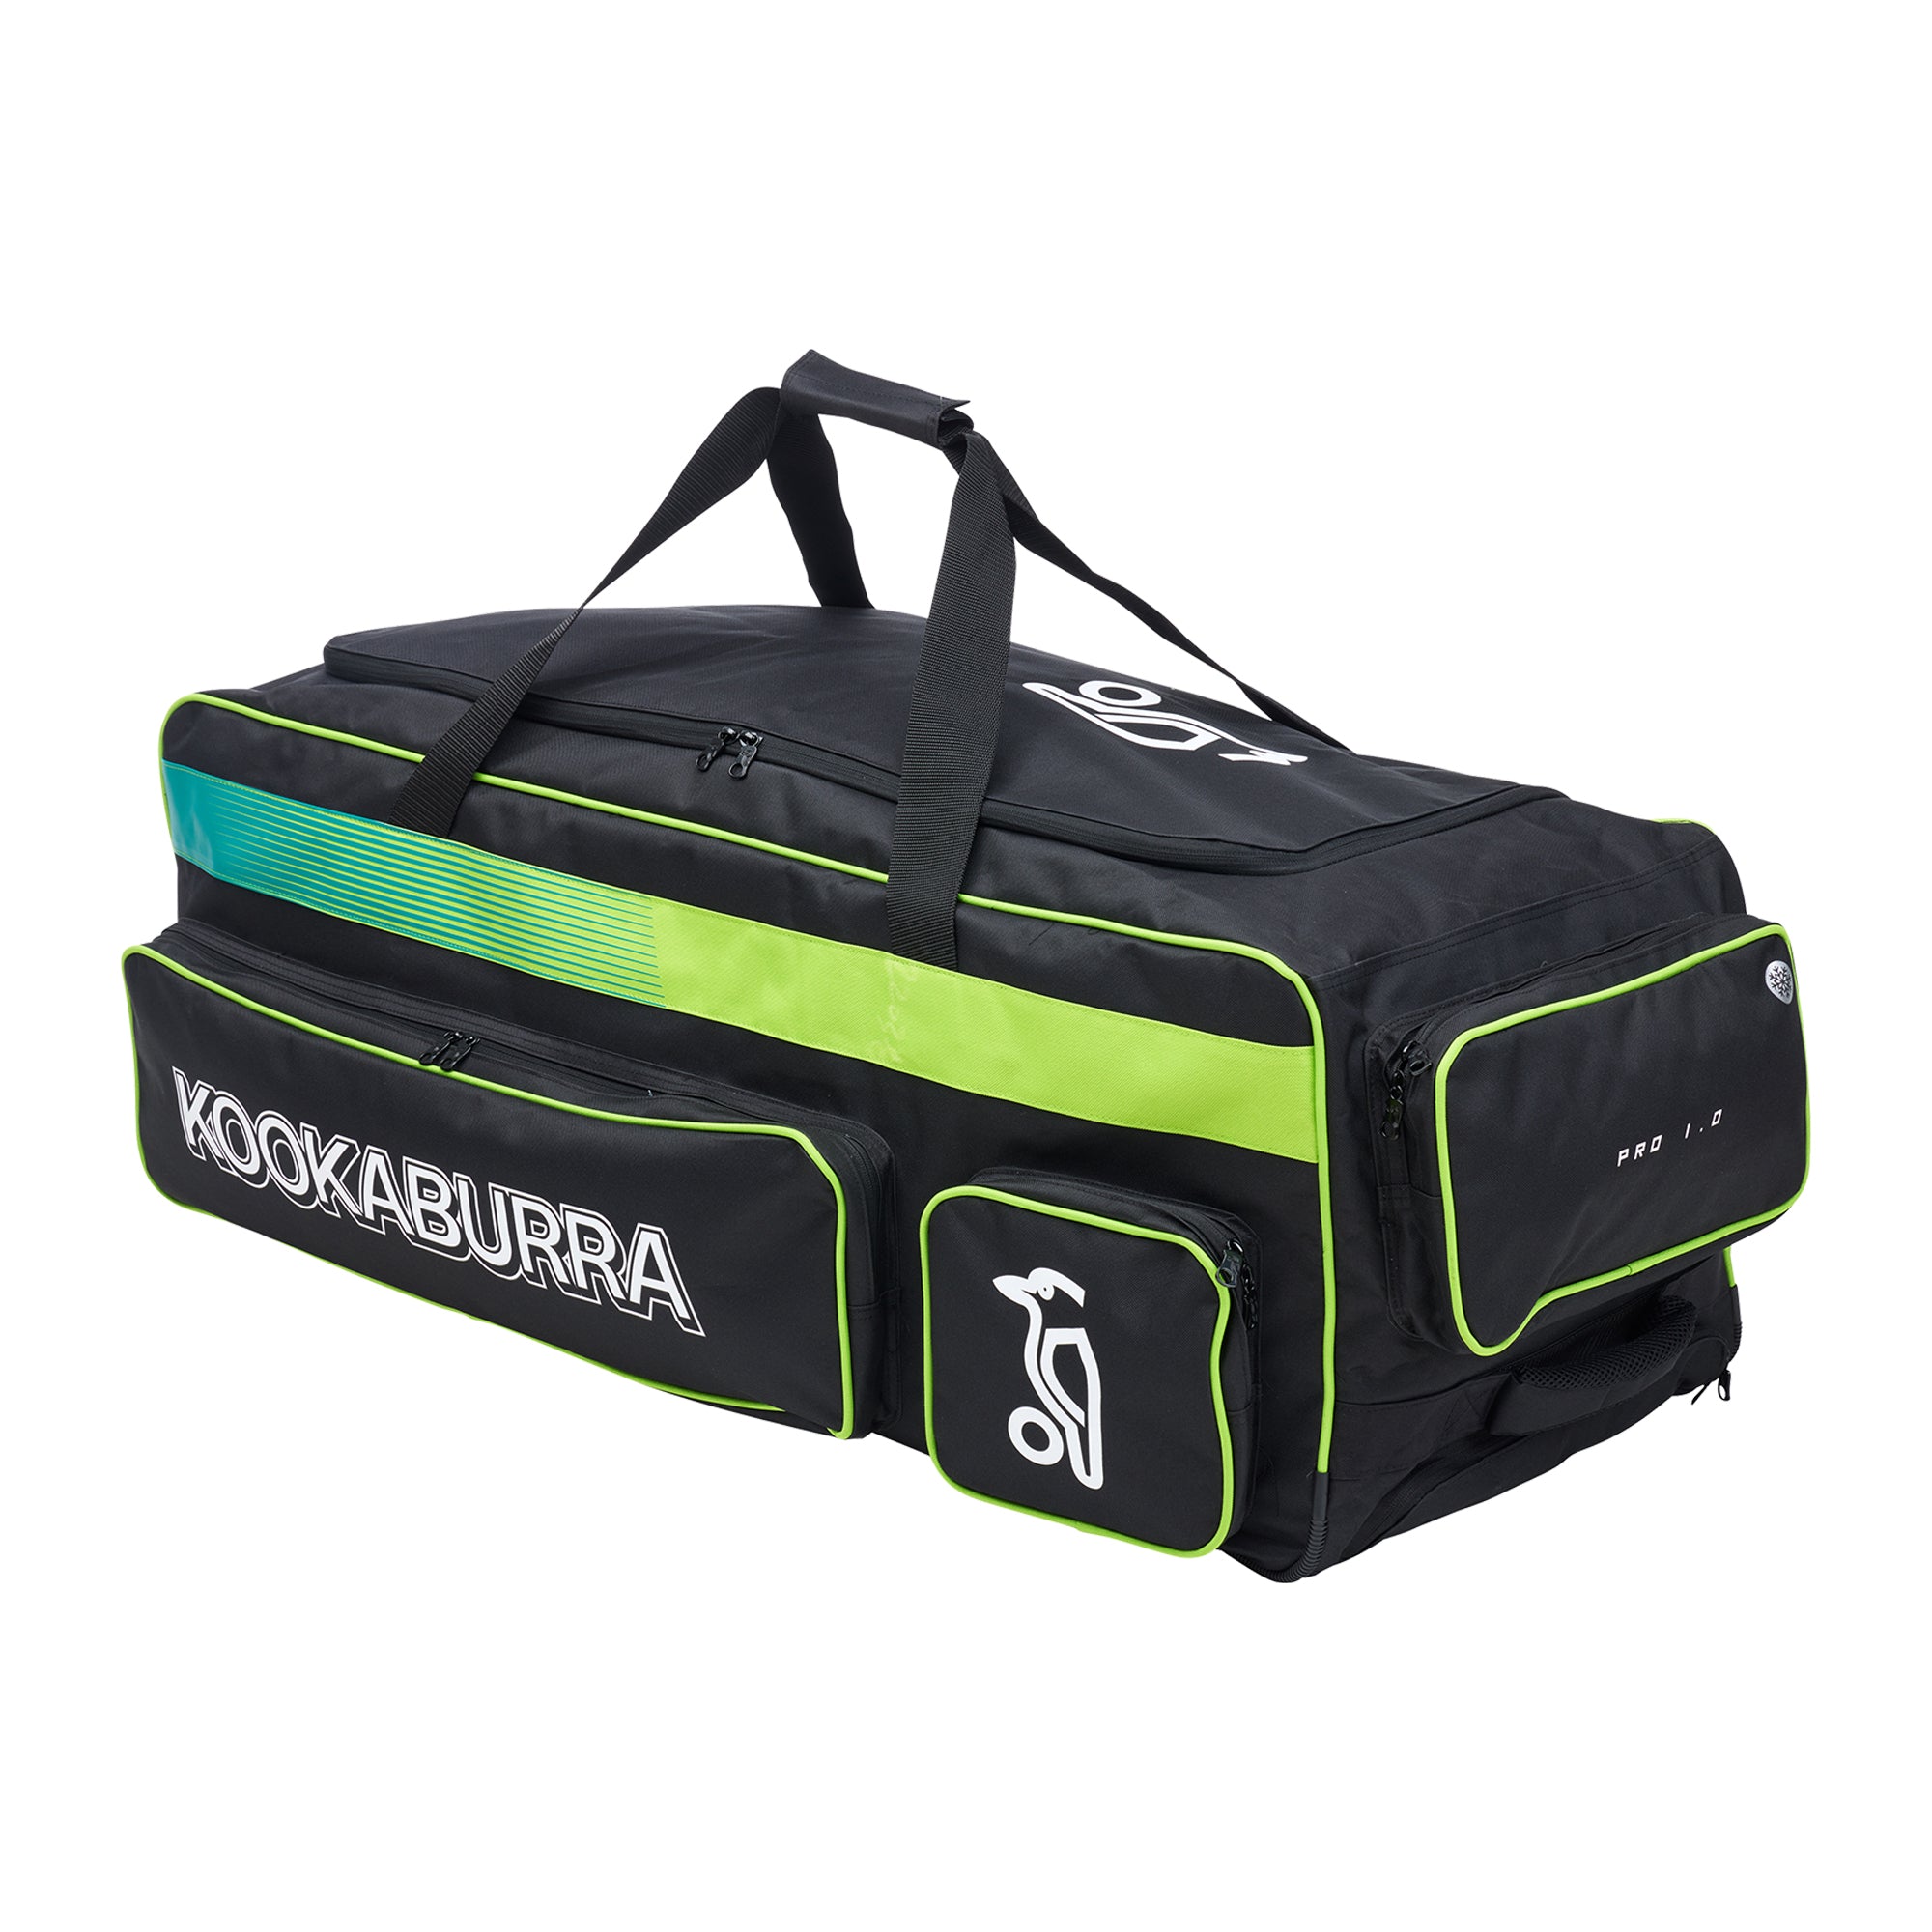 Kookaburra Pro 1.0 Wheel Cricket Kit Bag Black/White